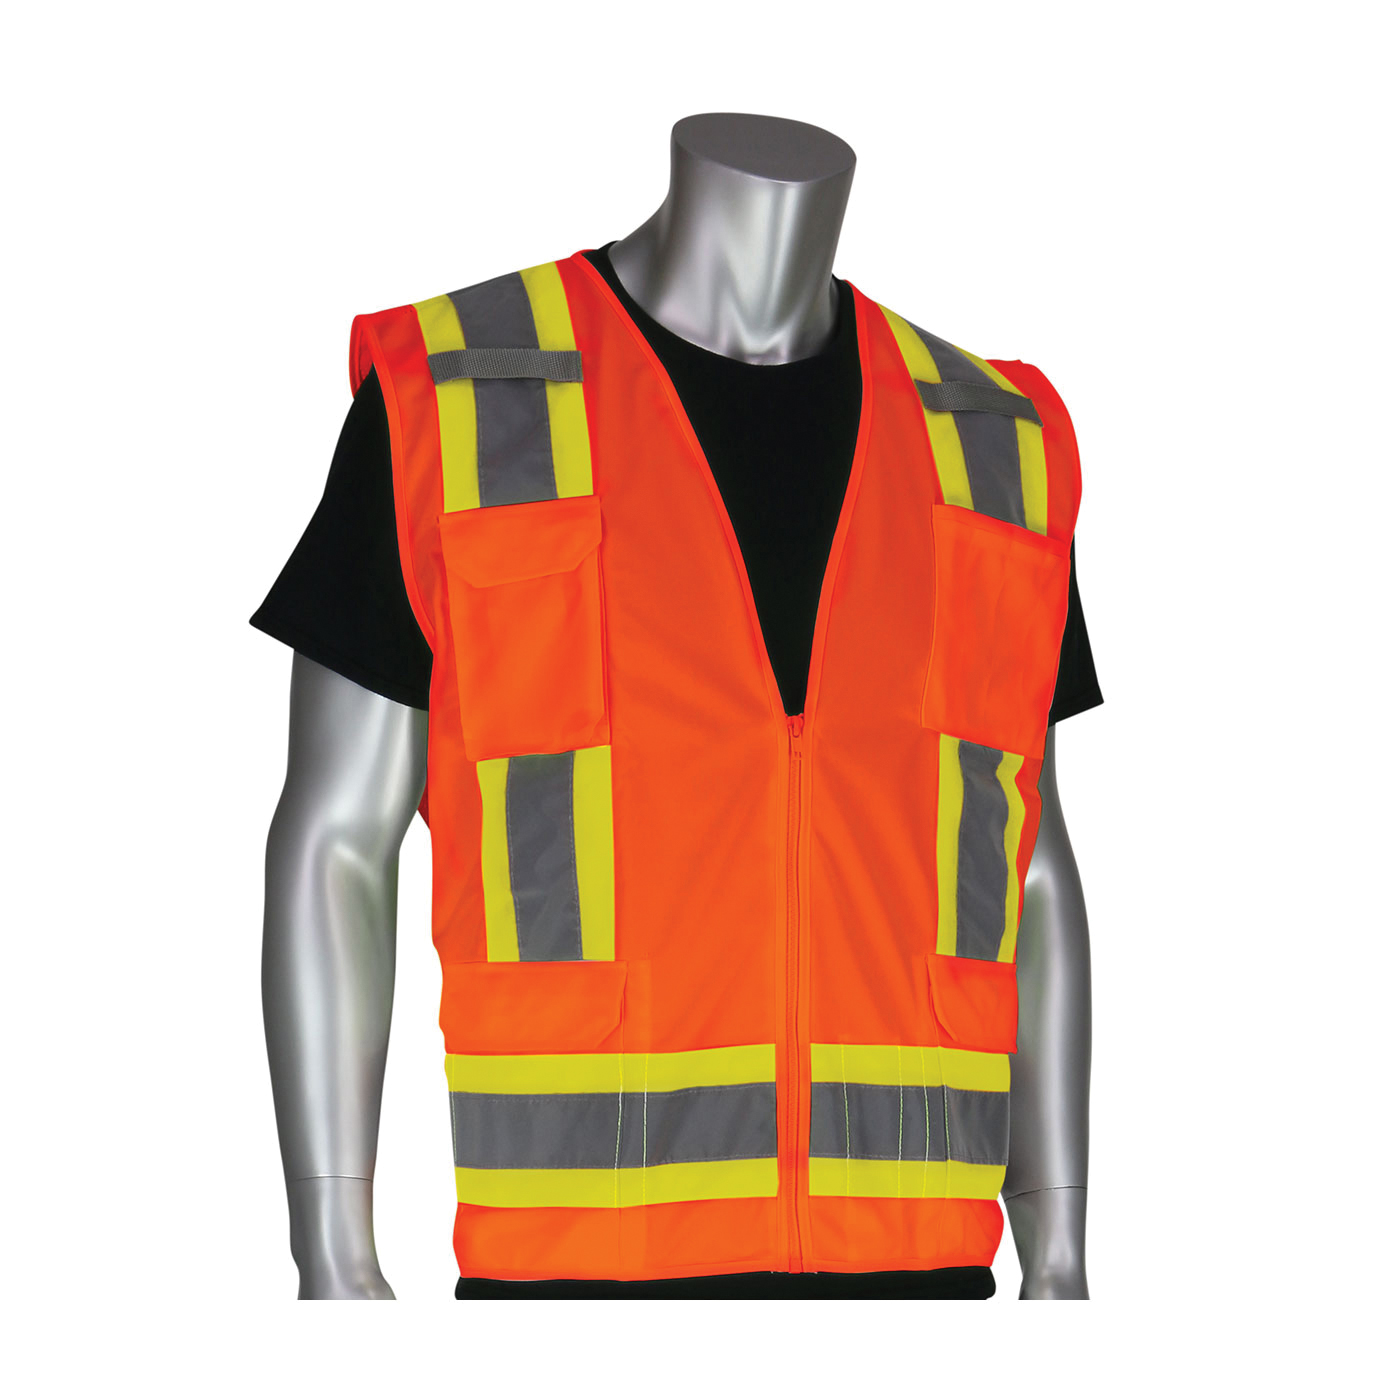 PIP® 302-0500-ORG/3X 2-Tone Surveyor Safety Vest, 3XL, Hi-Viz Orange, Polyester/Solid Tricot, Zipper Closure, 11 Pockets, ANSI Class: Class 2, Specifications Met: ANSI 107 Type R